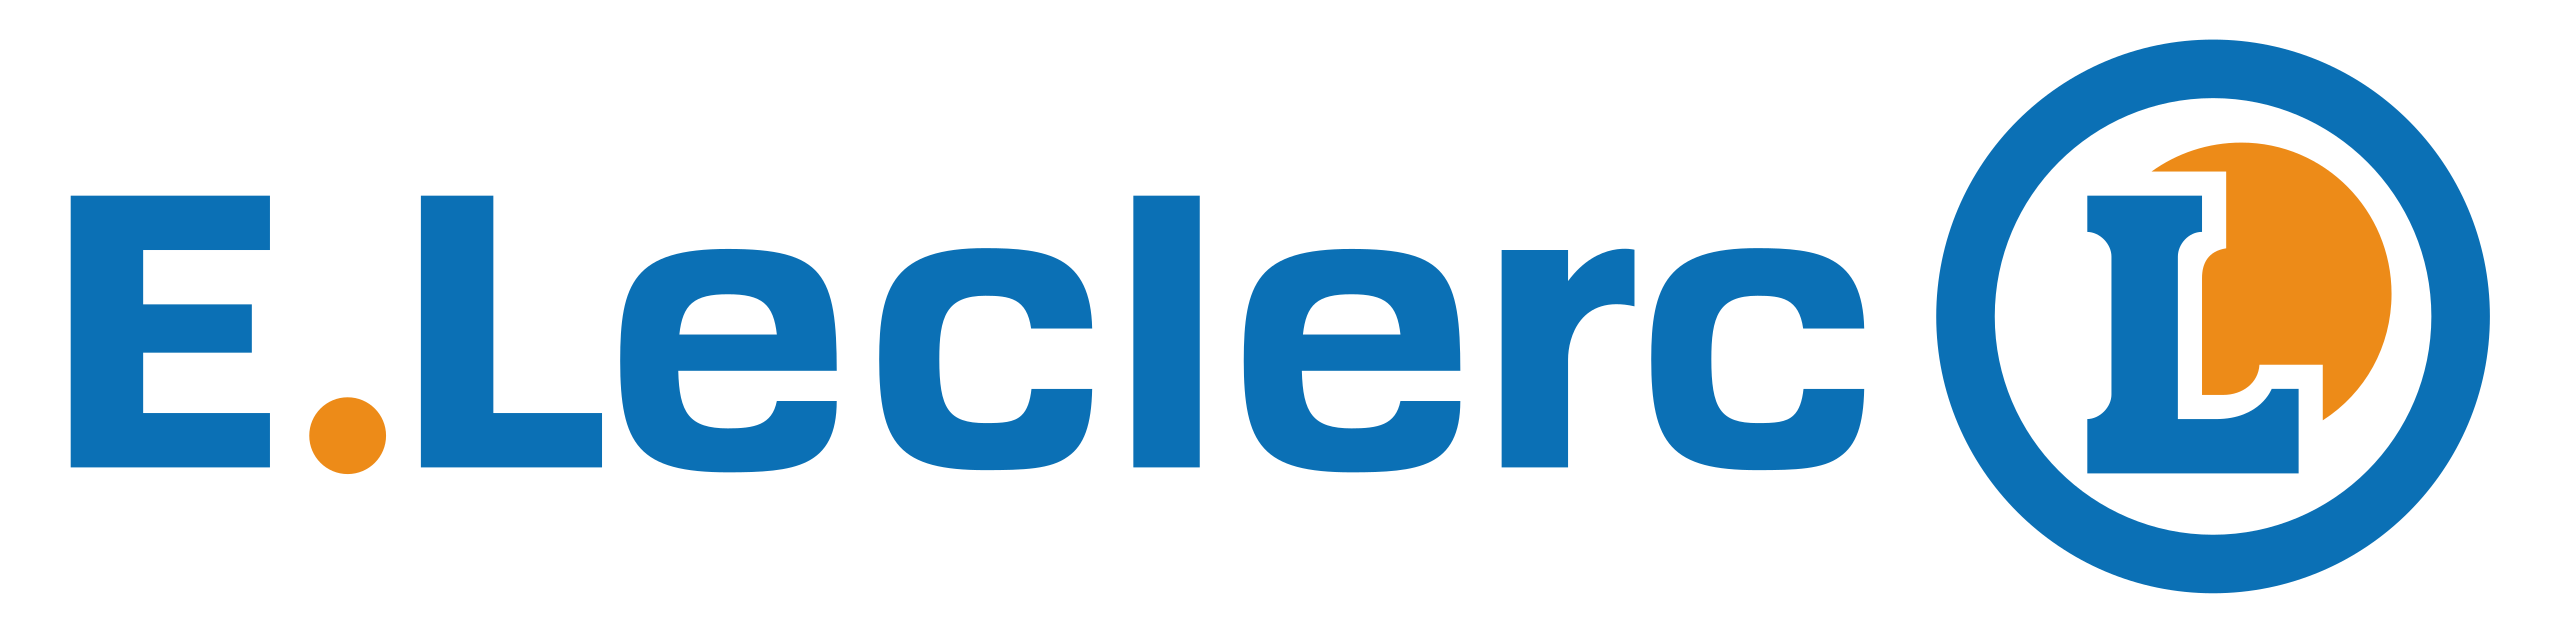 2560px-e.leclerc_logo.svg